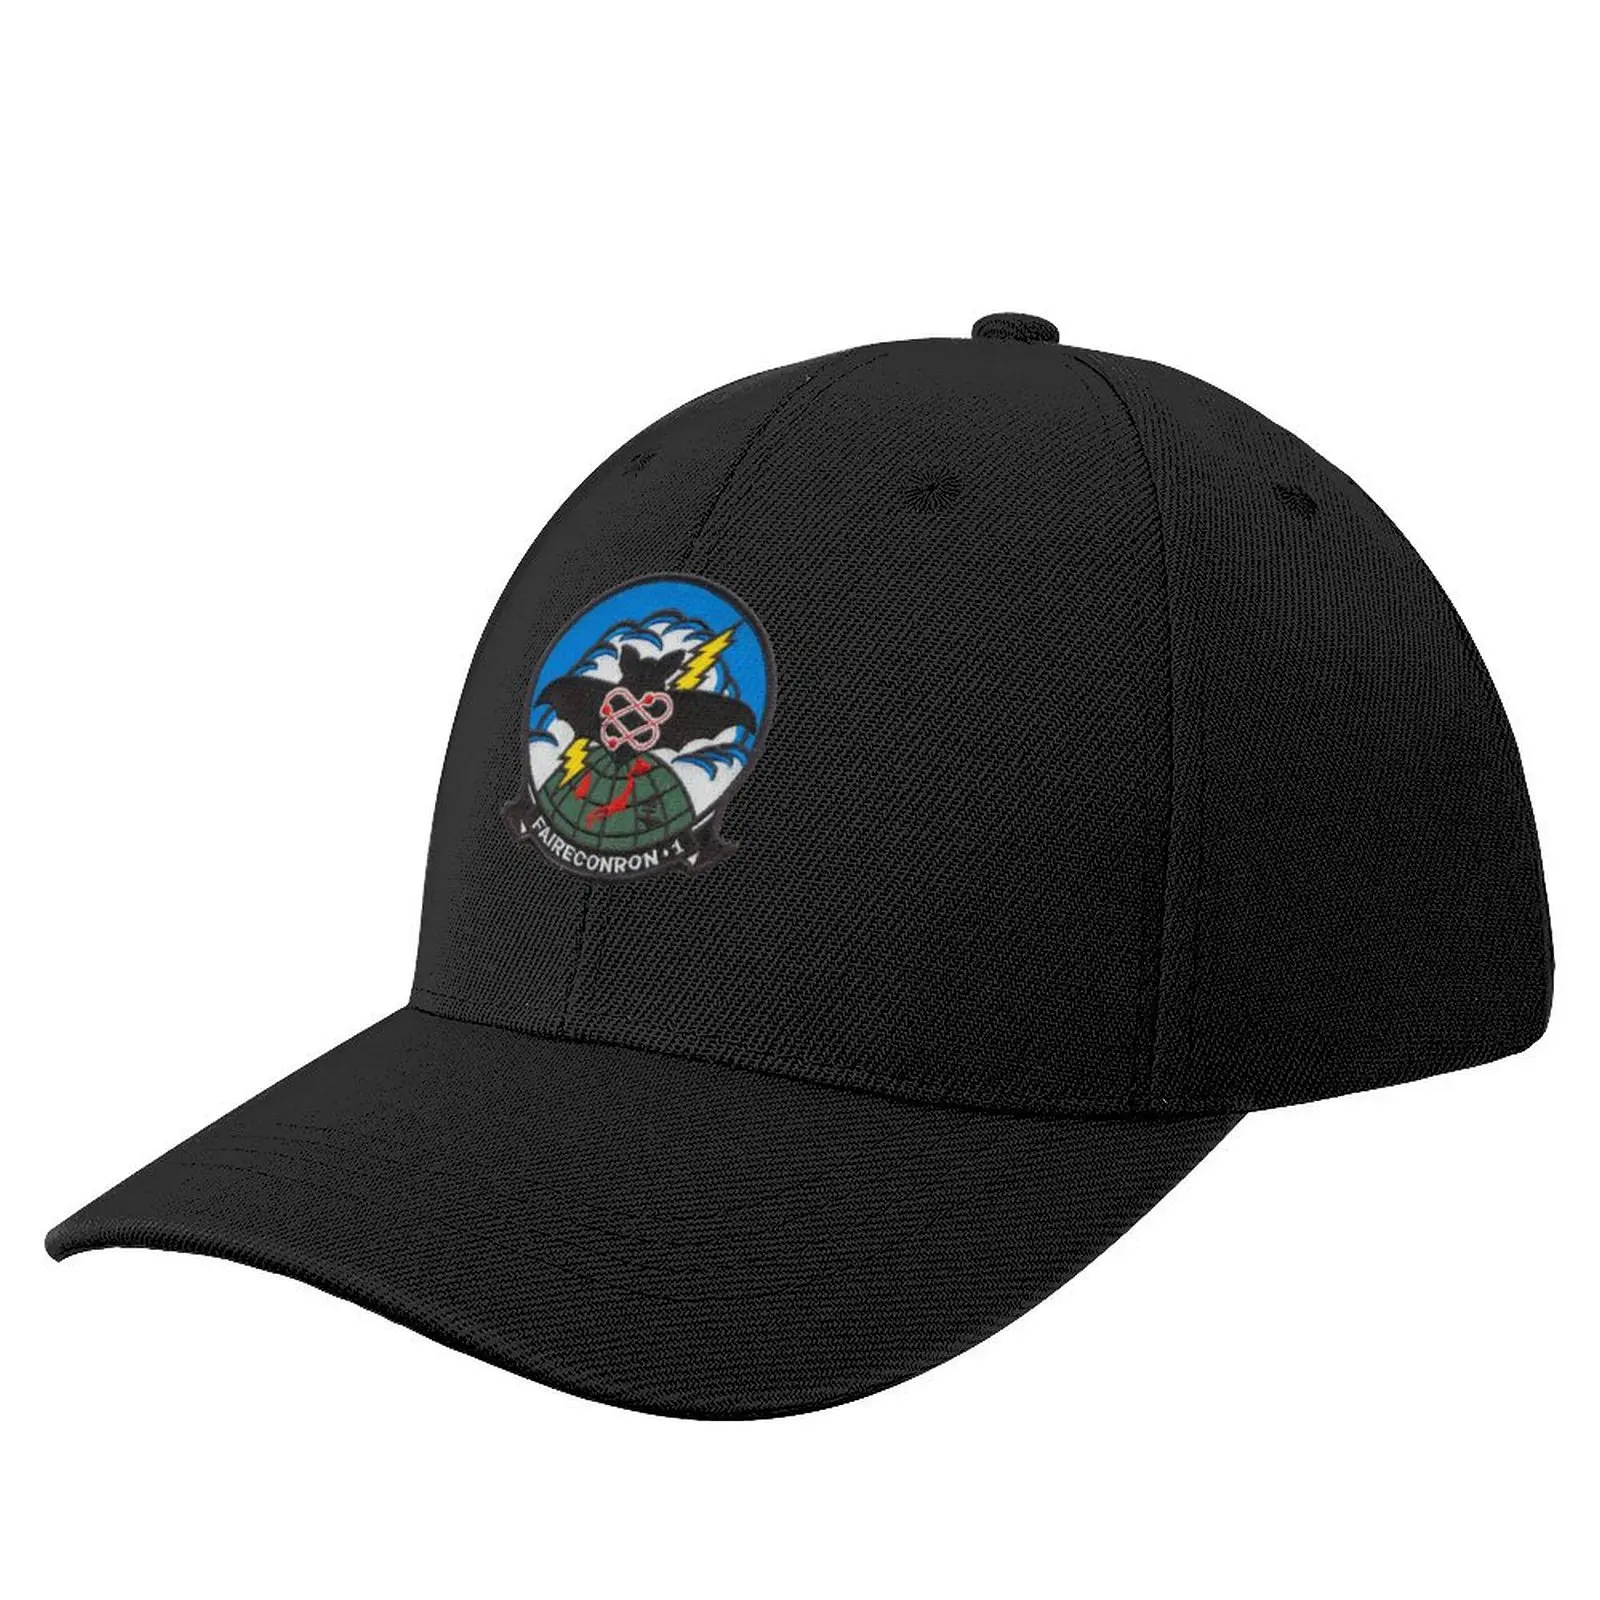 

VQ-1 FLEET AIR RECONNAISSANCE SQUADRON 1 STORE Baseball Cap Golf Hat Man summer hat Custom Cap custom Hat Mens Hats Women's